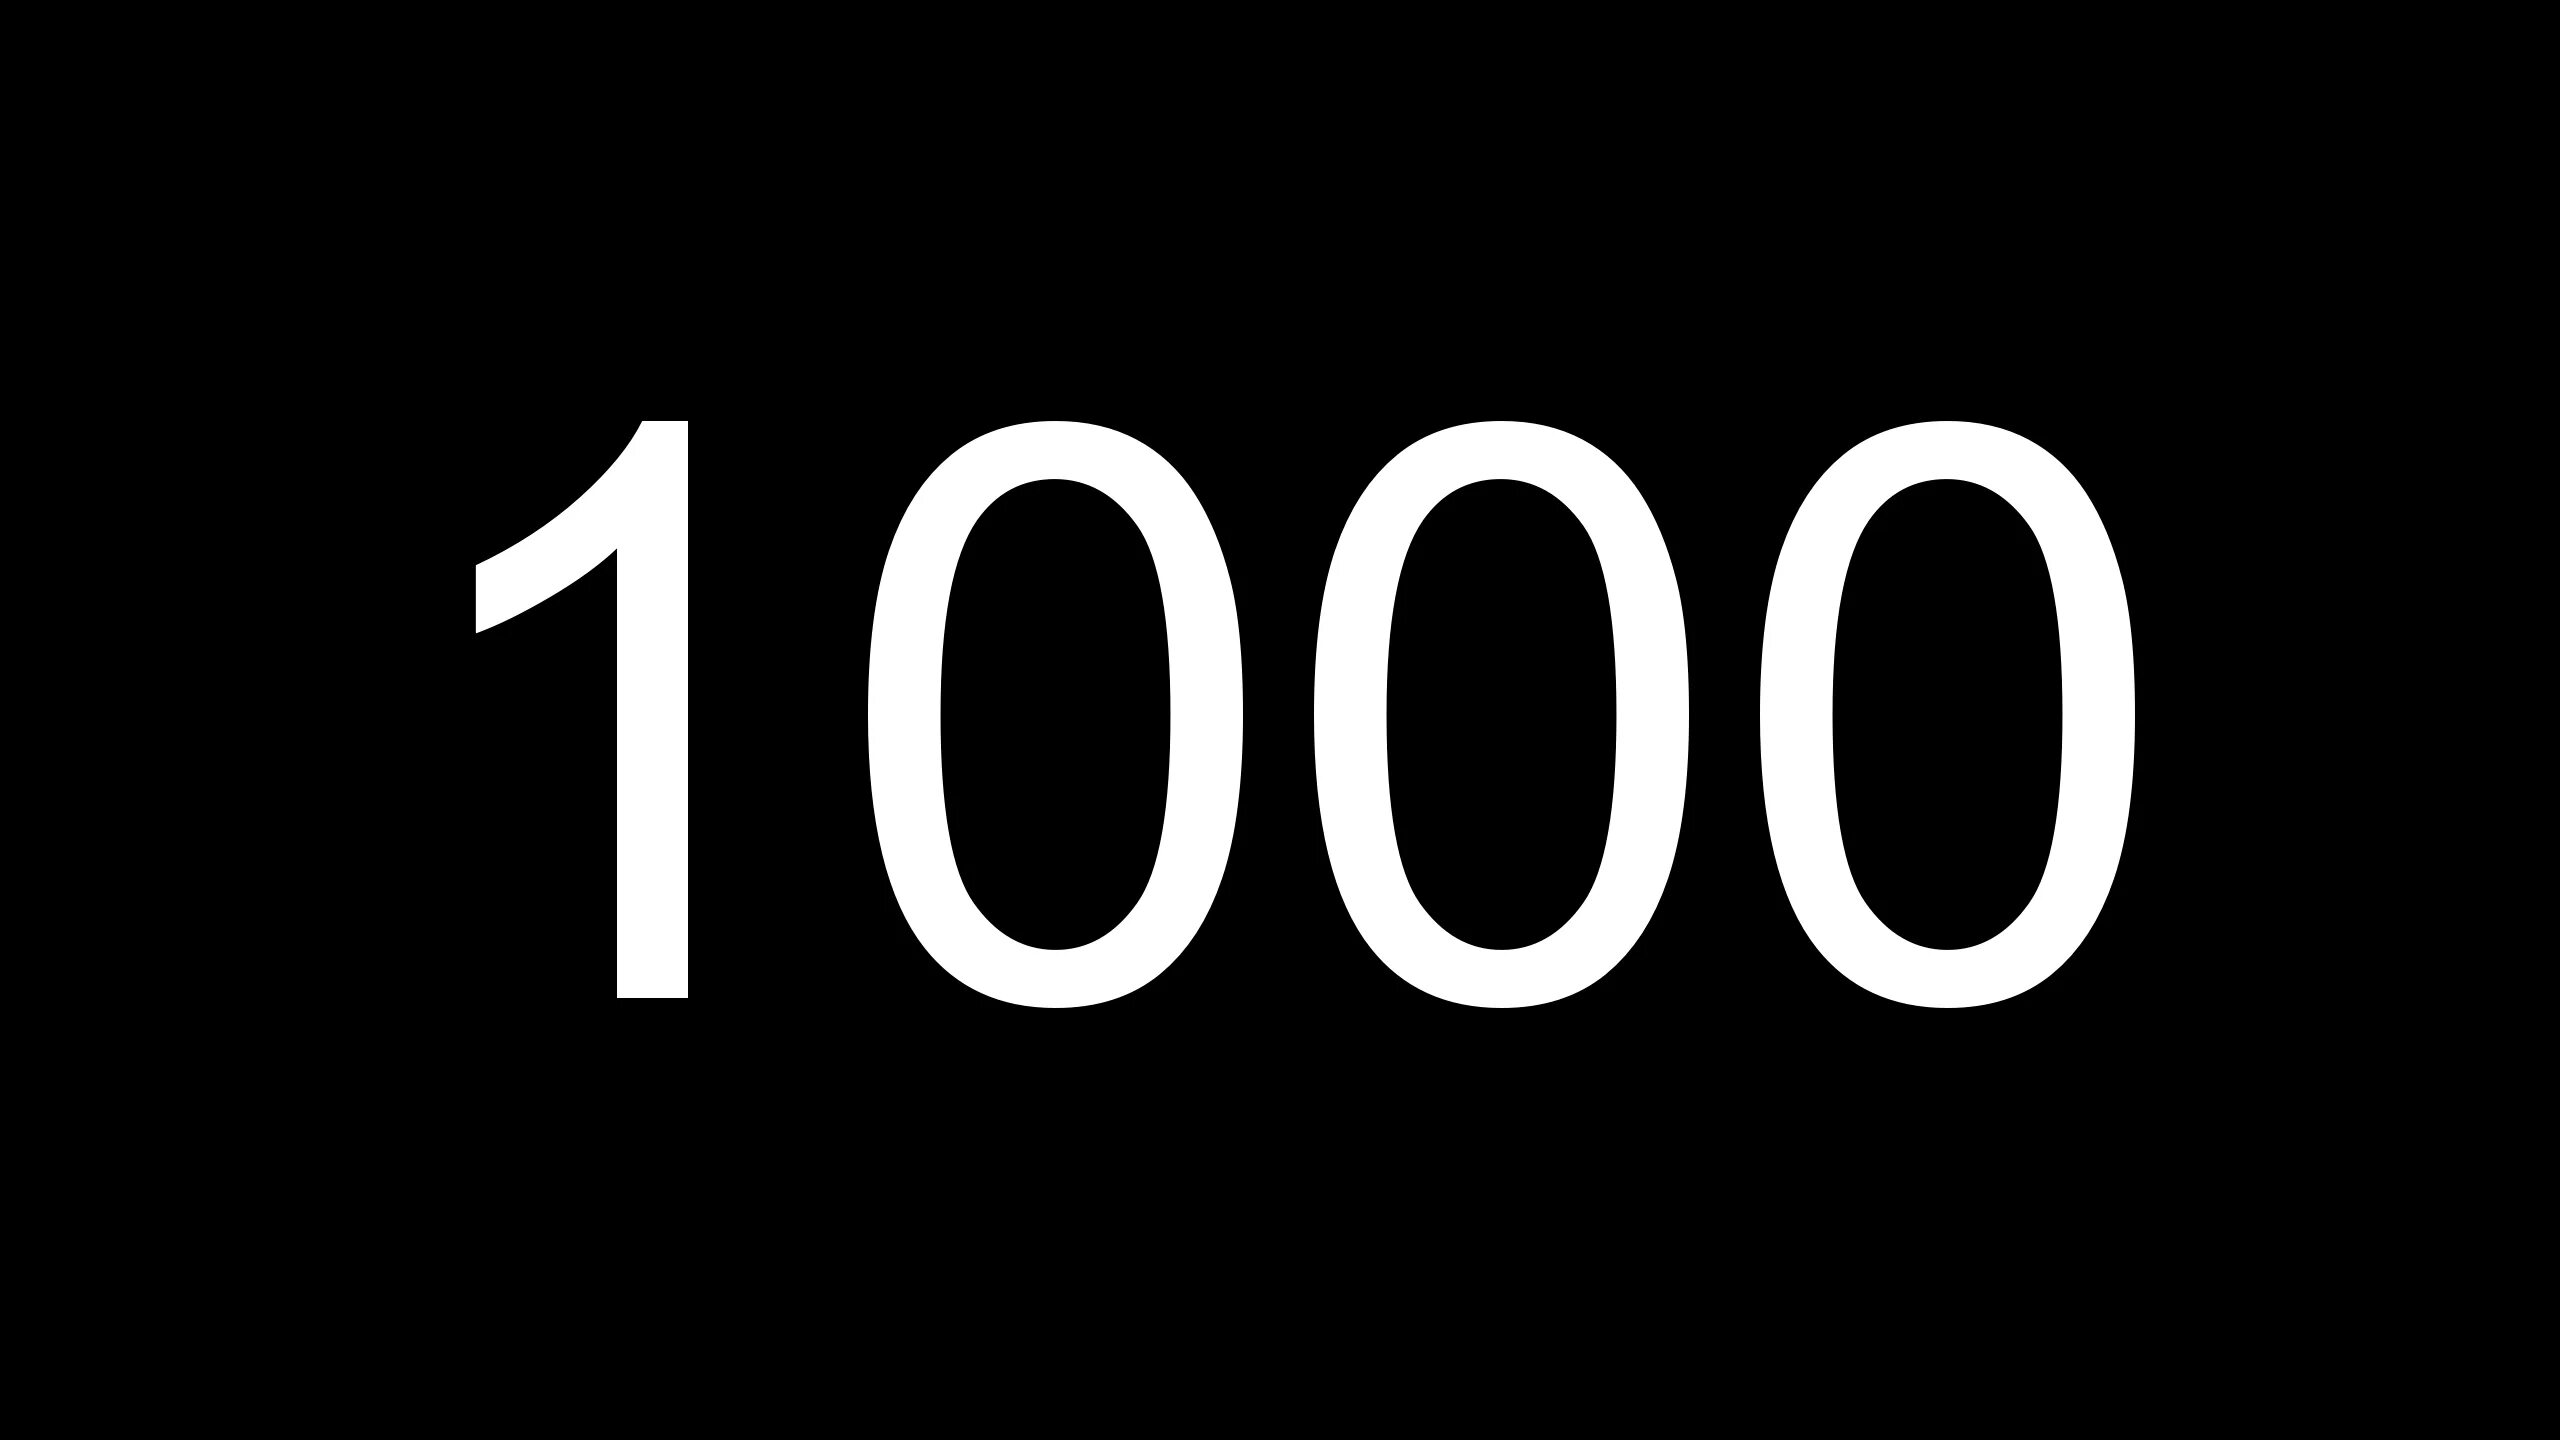 Цифра 1000. 1000 Надпись. 1000 Картинка. 1000 Руб цифрами.